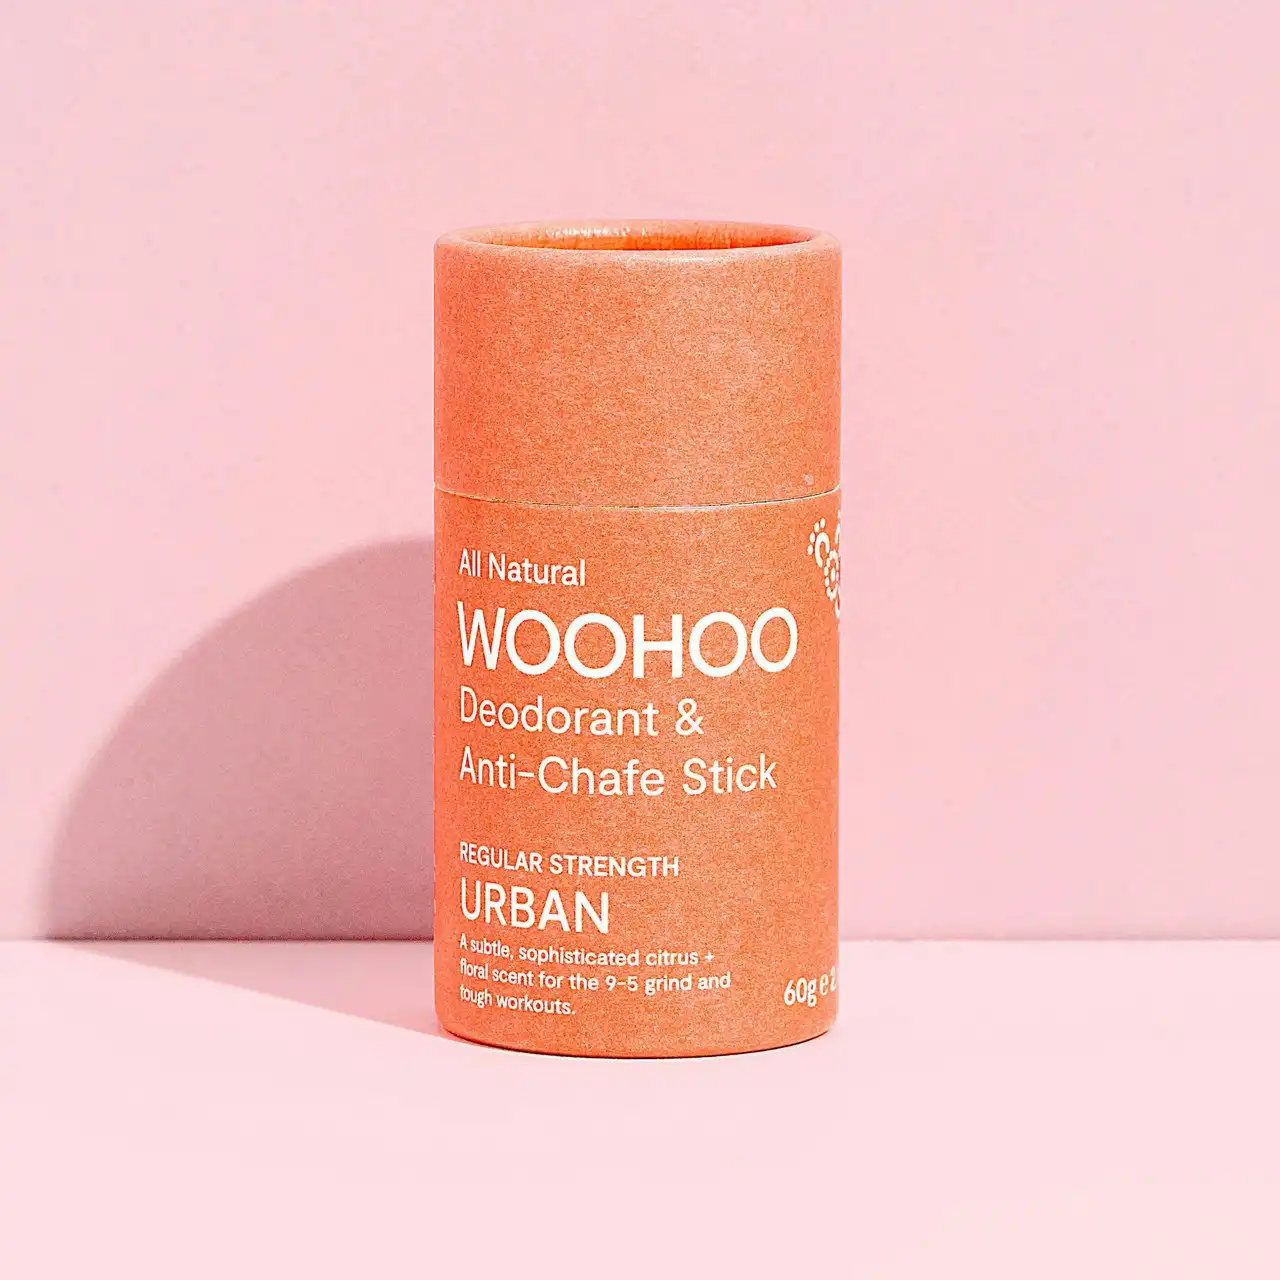 Woohoo Natural Deodorant & Anti-Chafe Stick Urban 60g